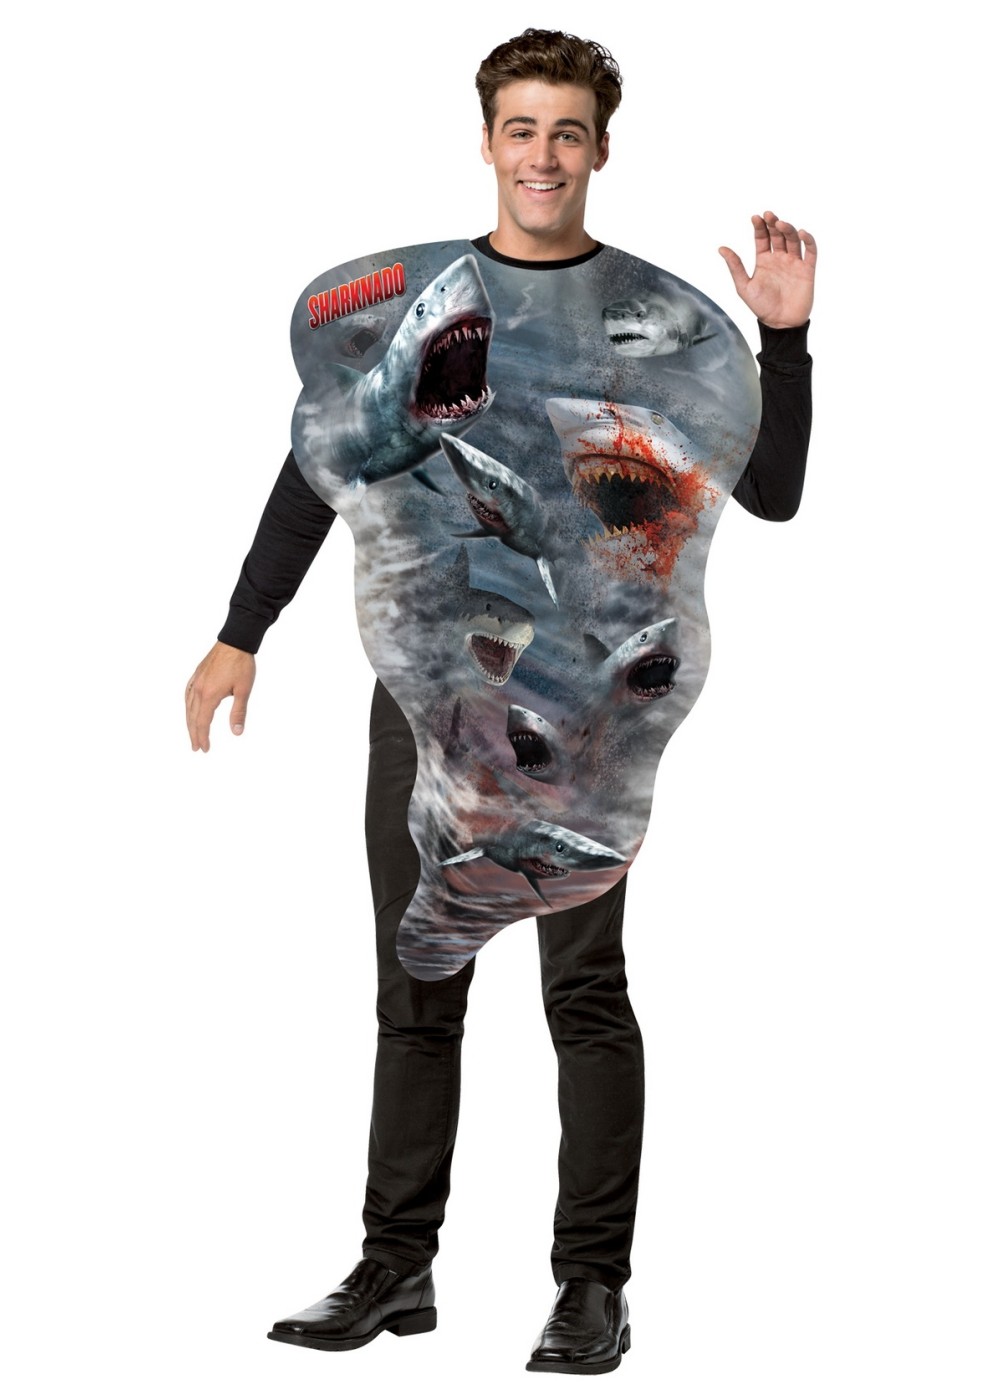  Sharknado Tornado Costume